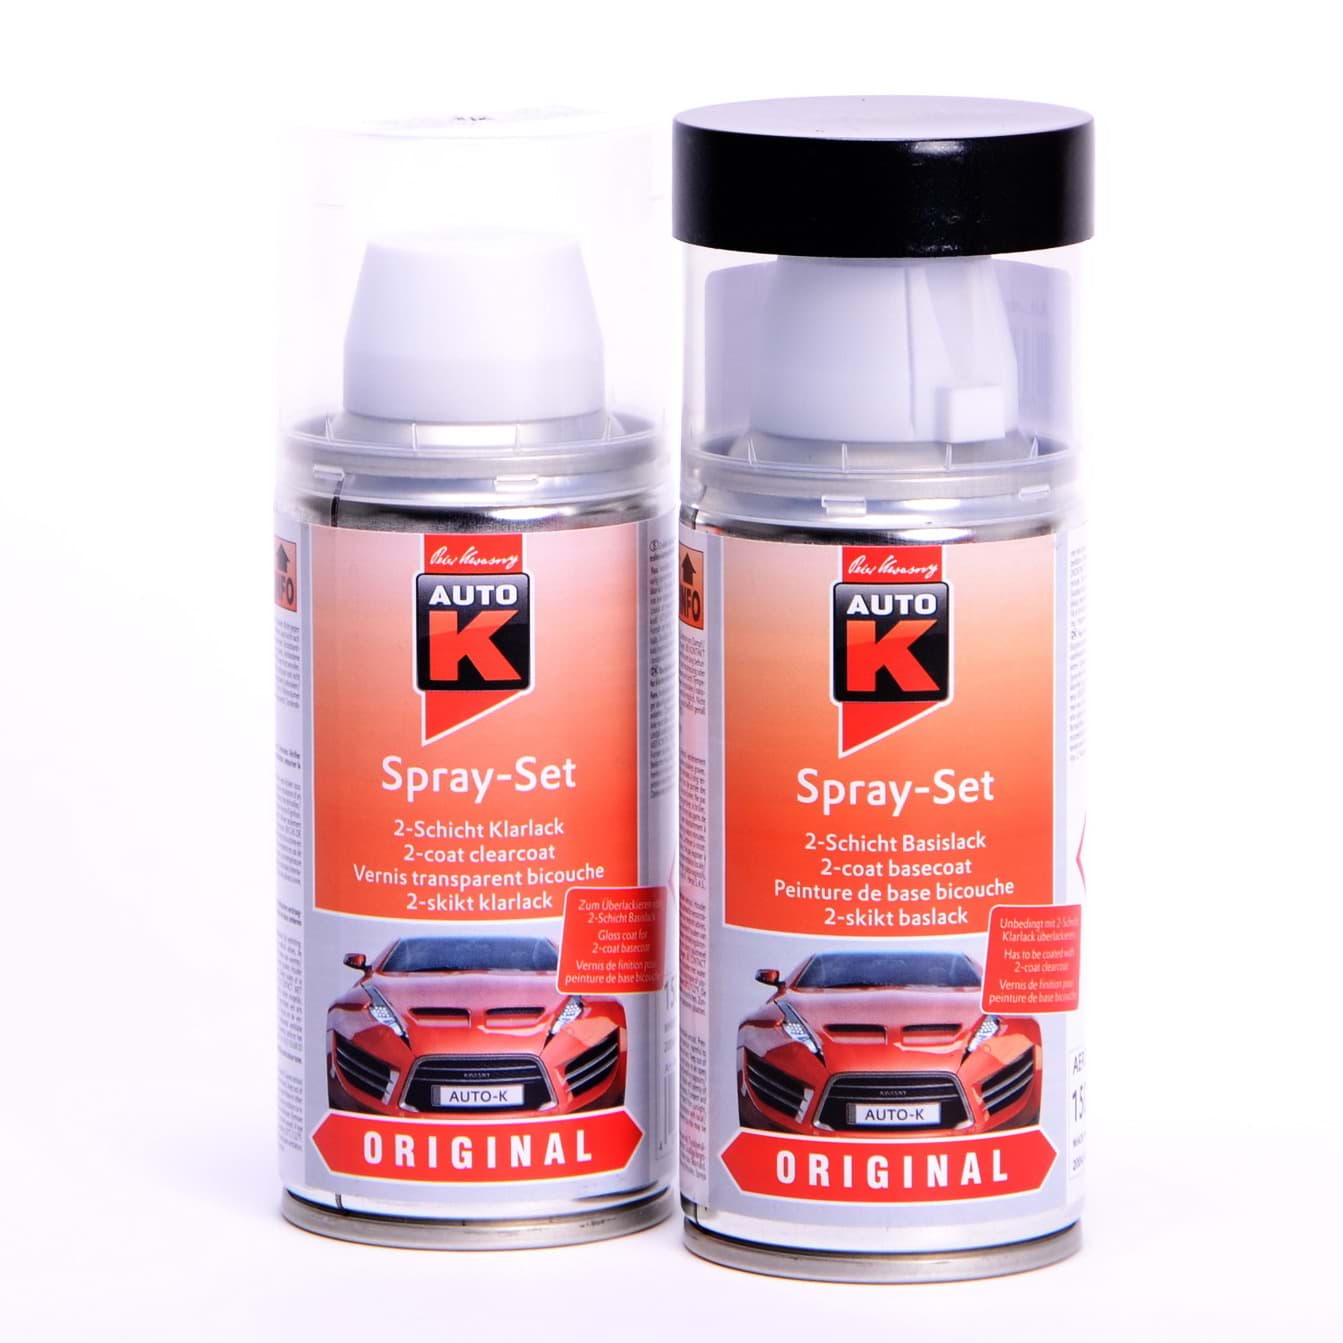 Afbeelding van Auto-K Spray-Set Autolack für Opel 549 Marseillerot met 21366